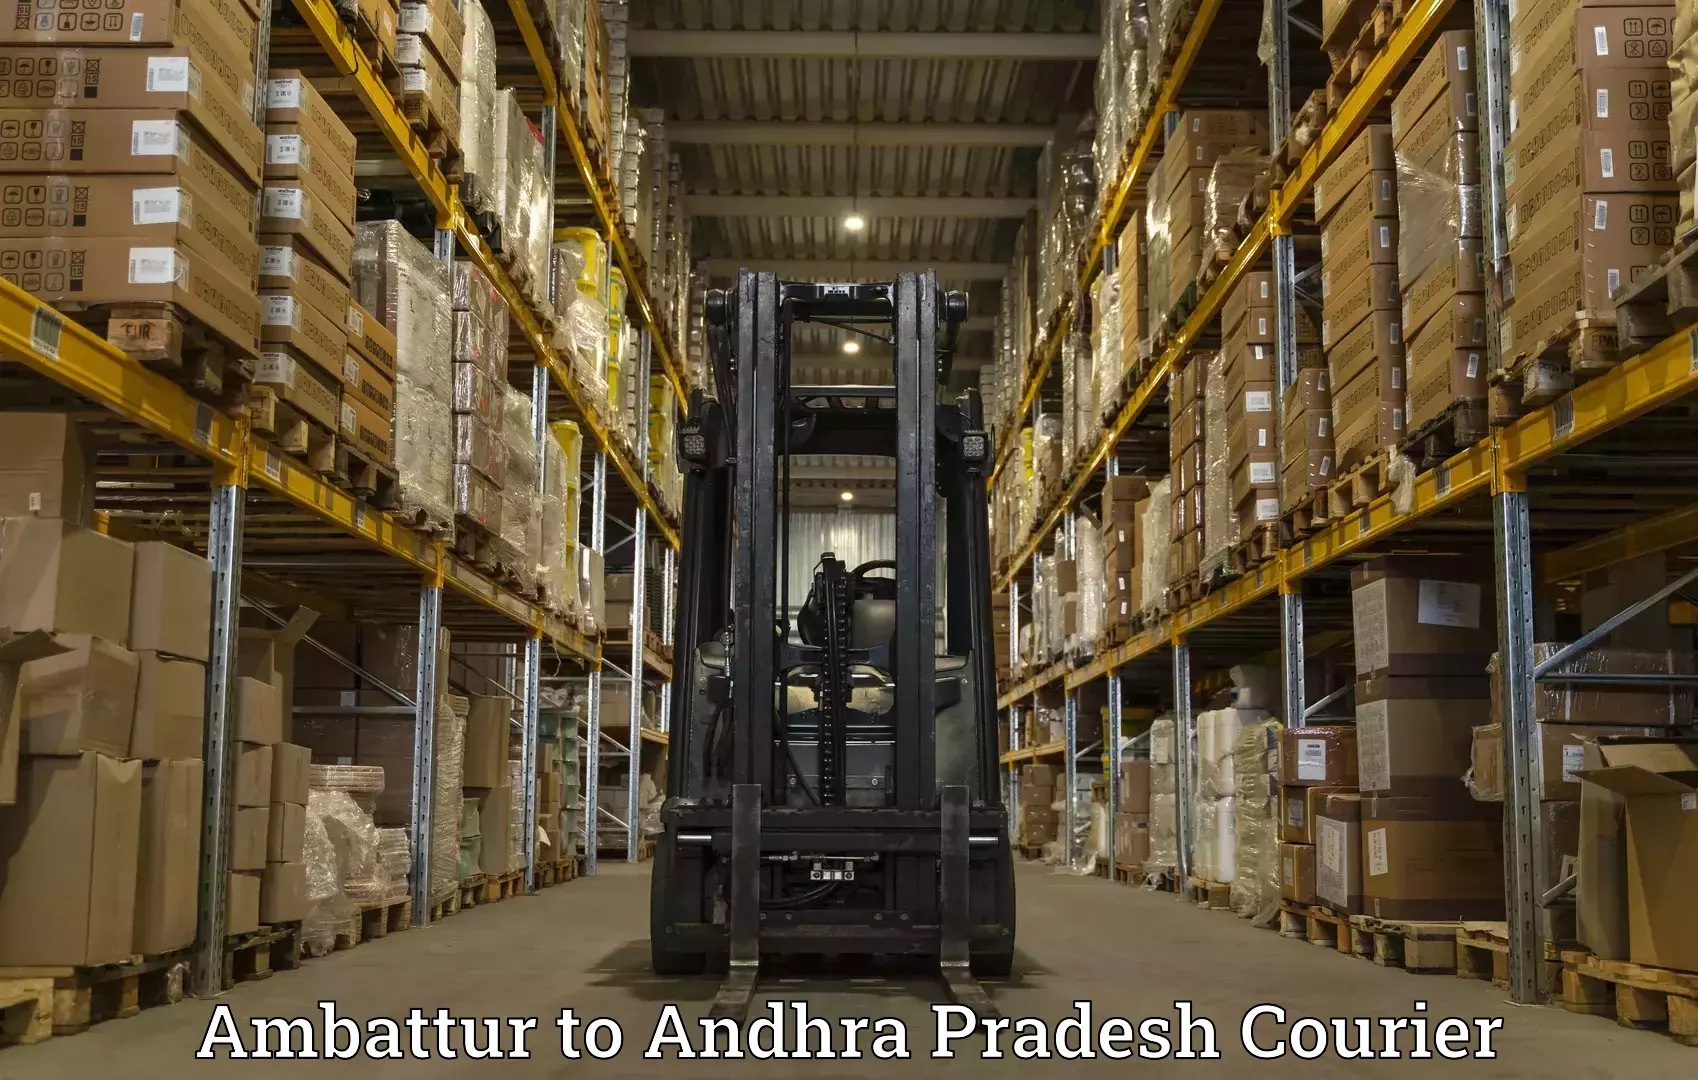 High-capacity parcel service Ambattur to Velgodu